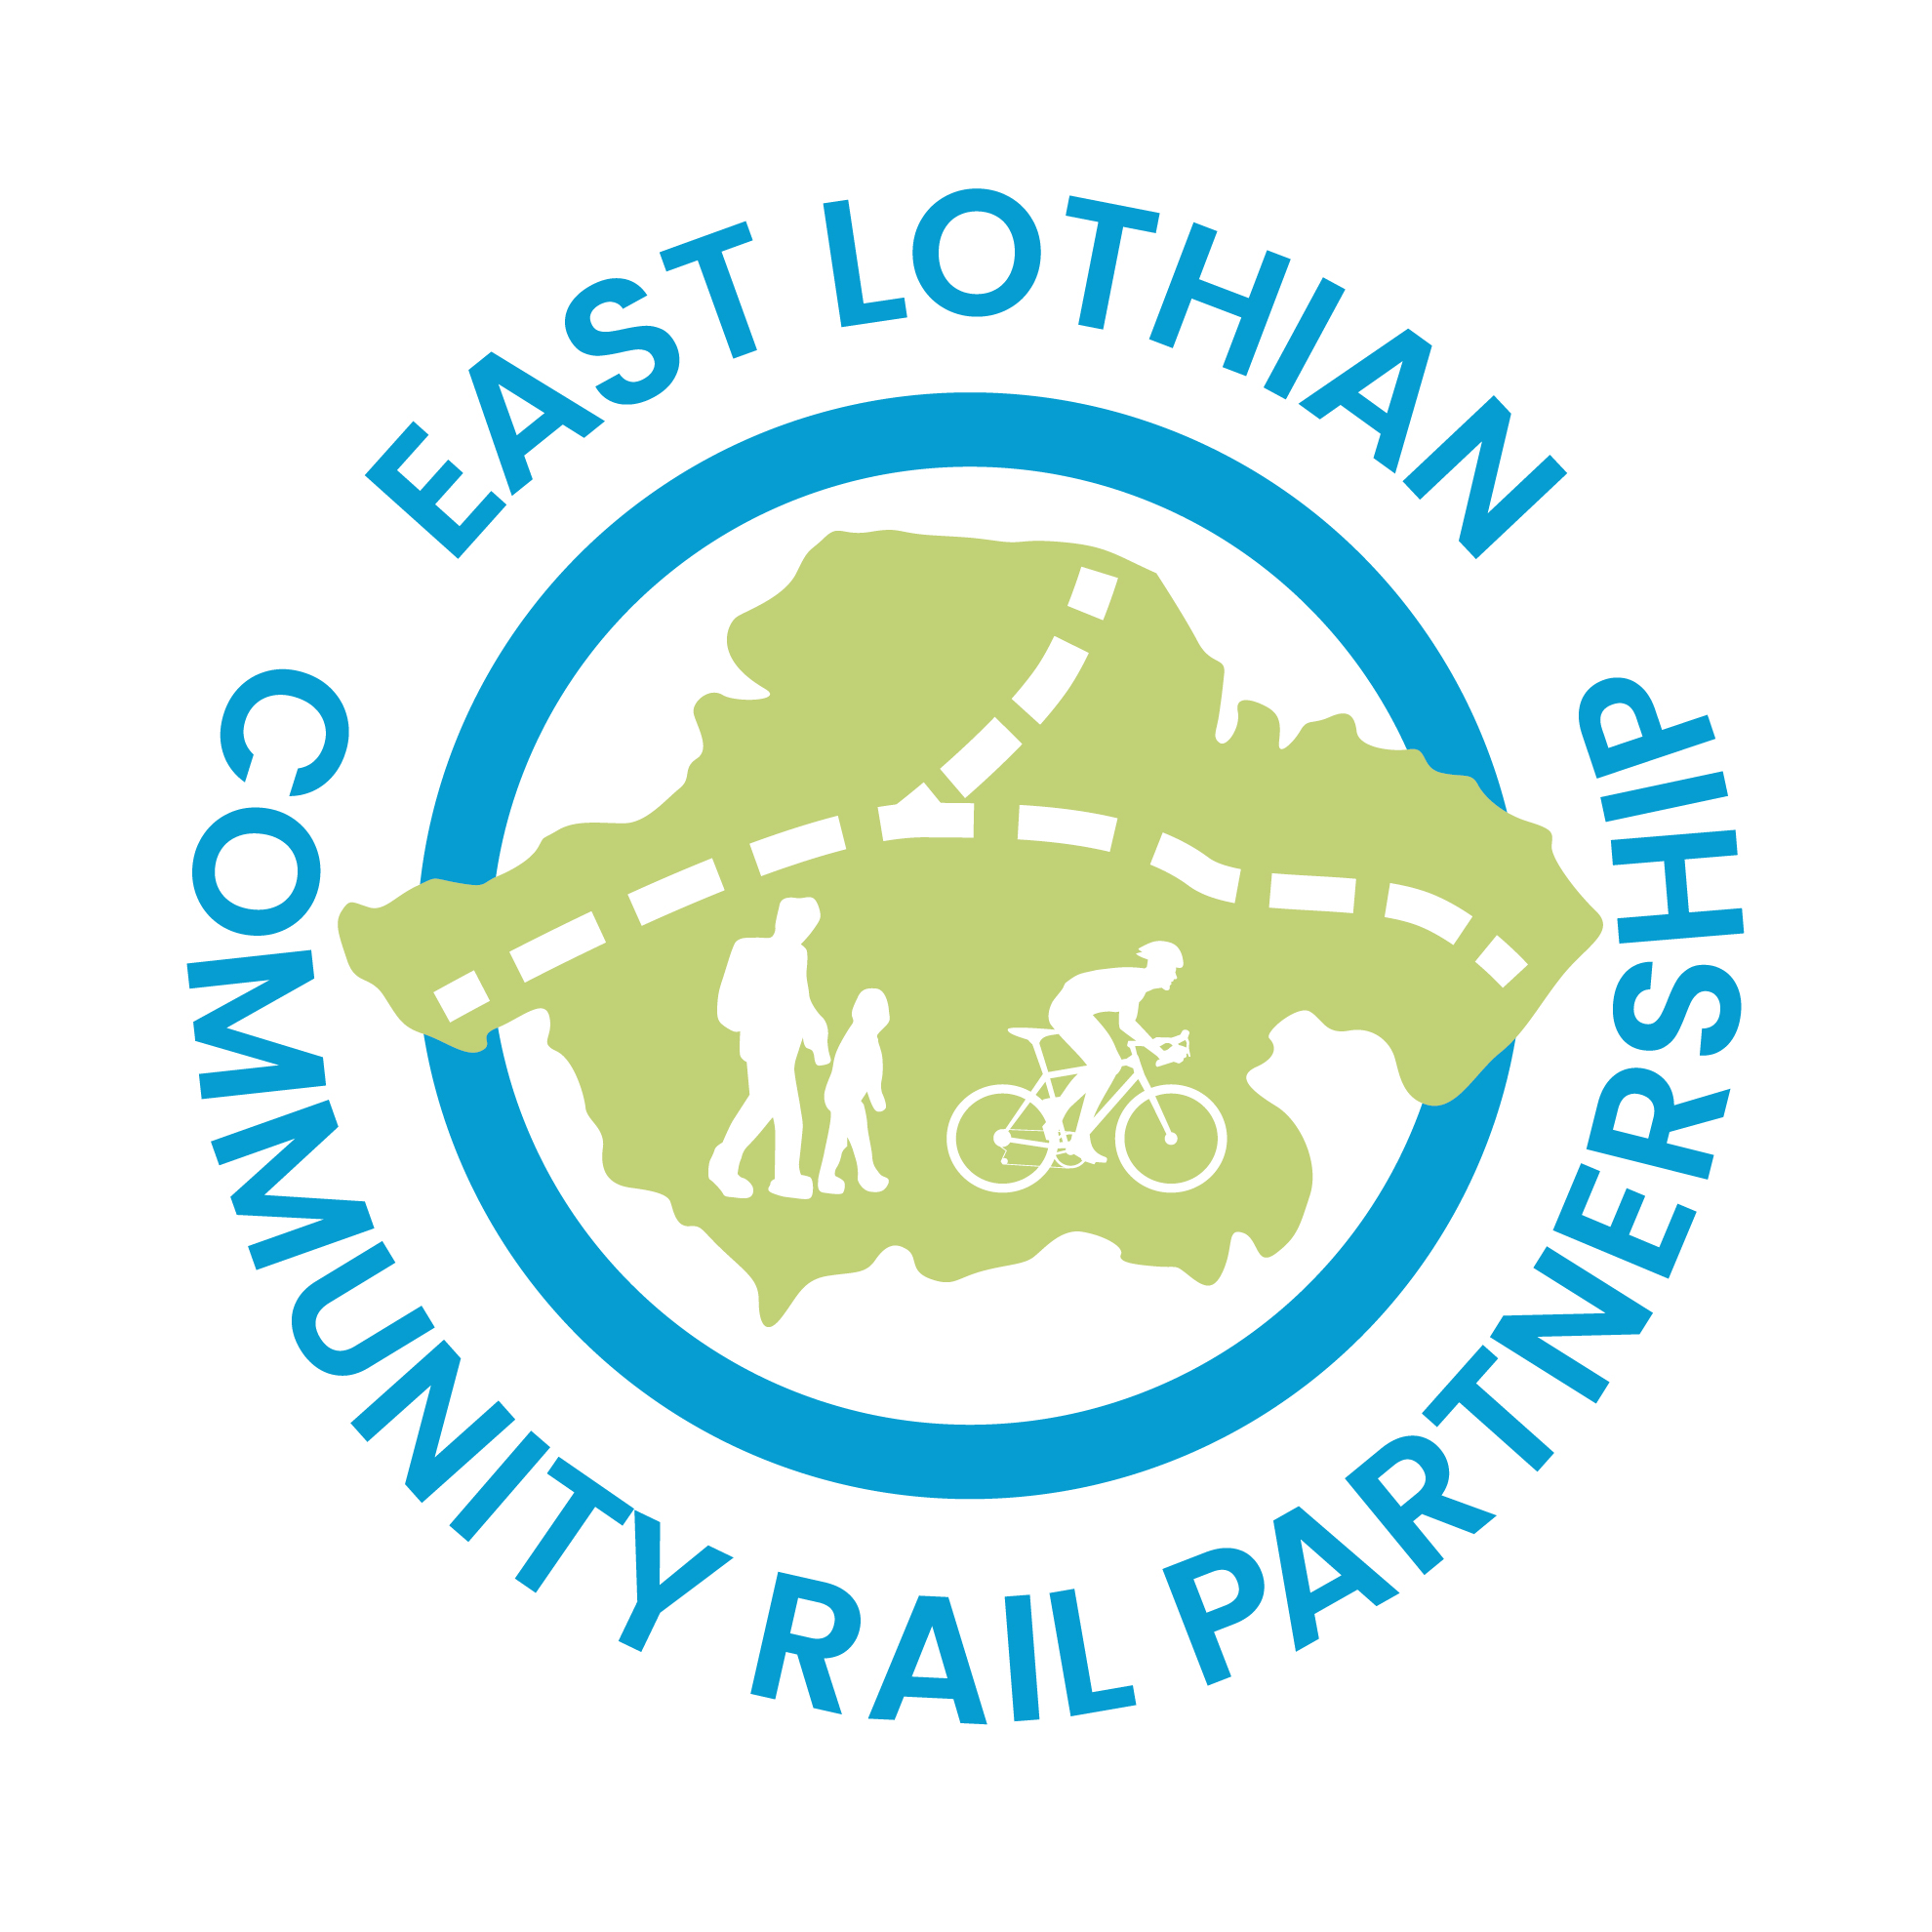 East Lothian Community Rail Partnership